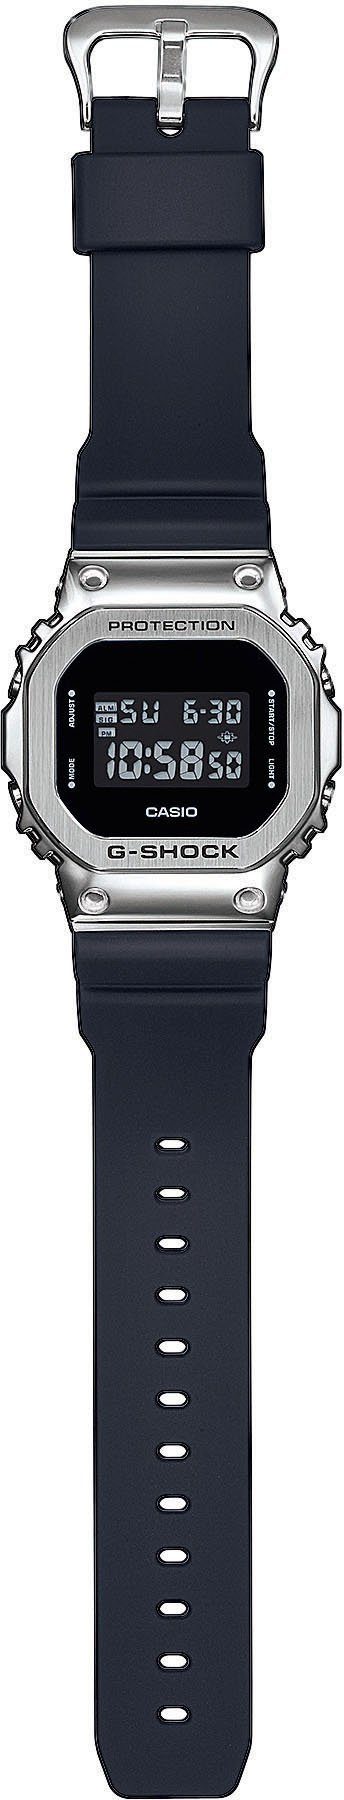 CASIO G-SHOCK Chronograph GM-5600-1ER